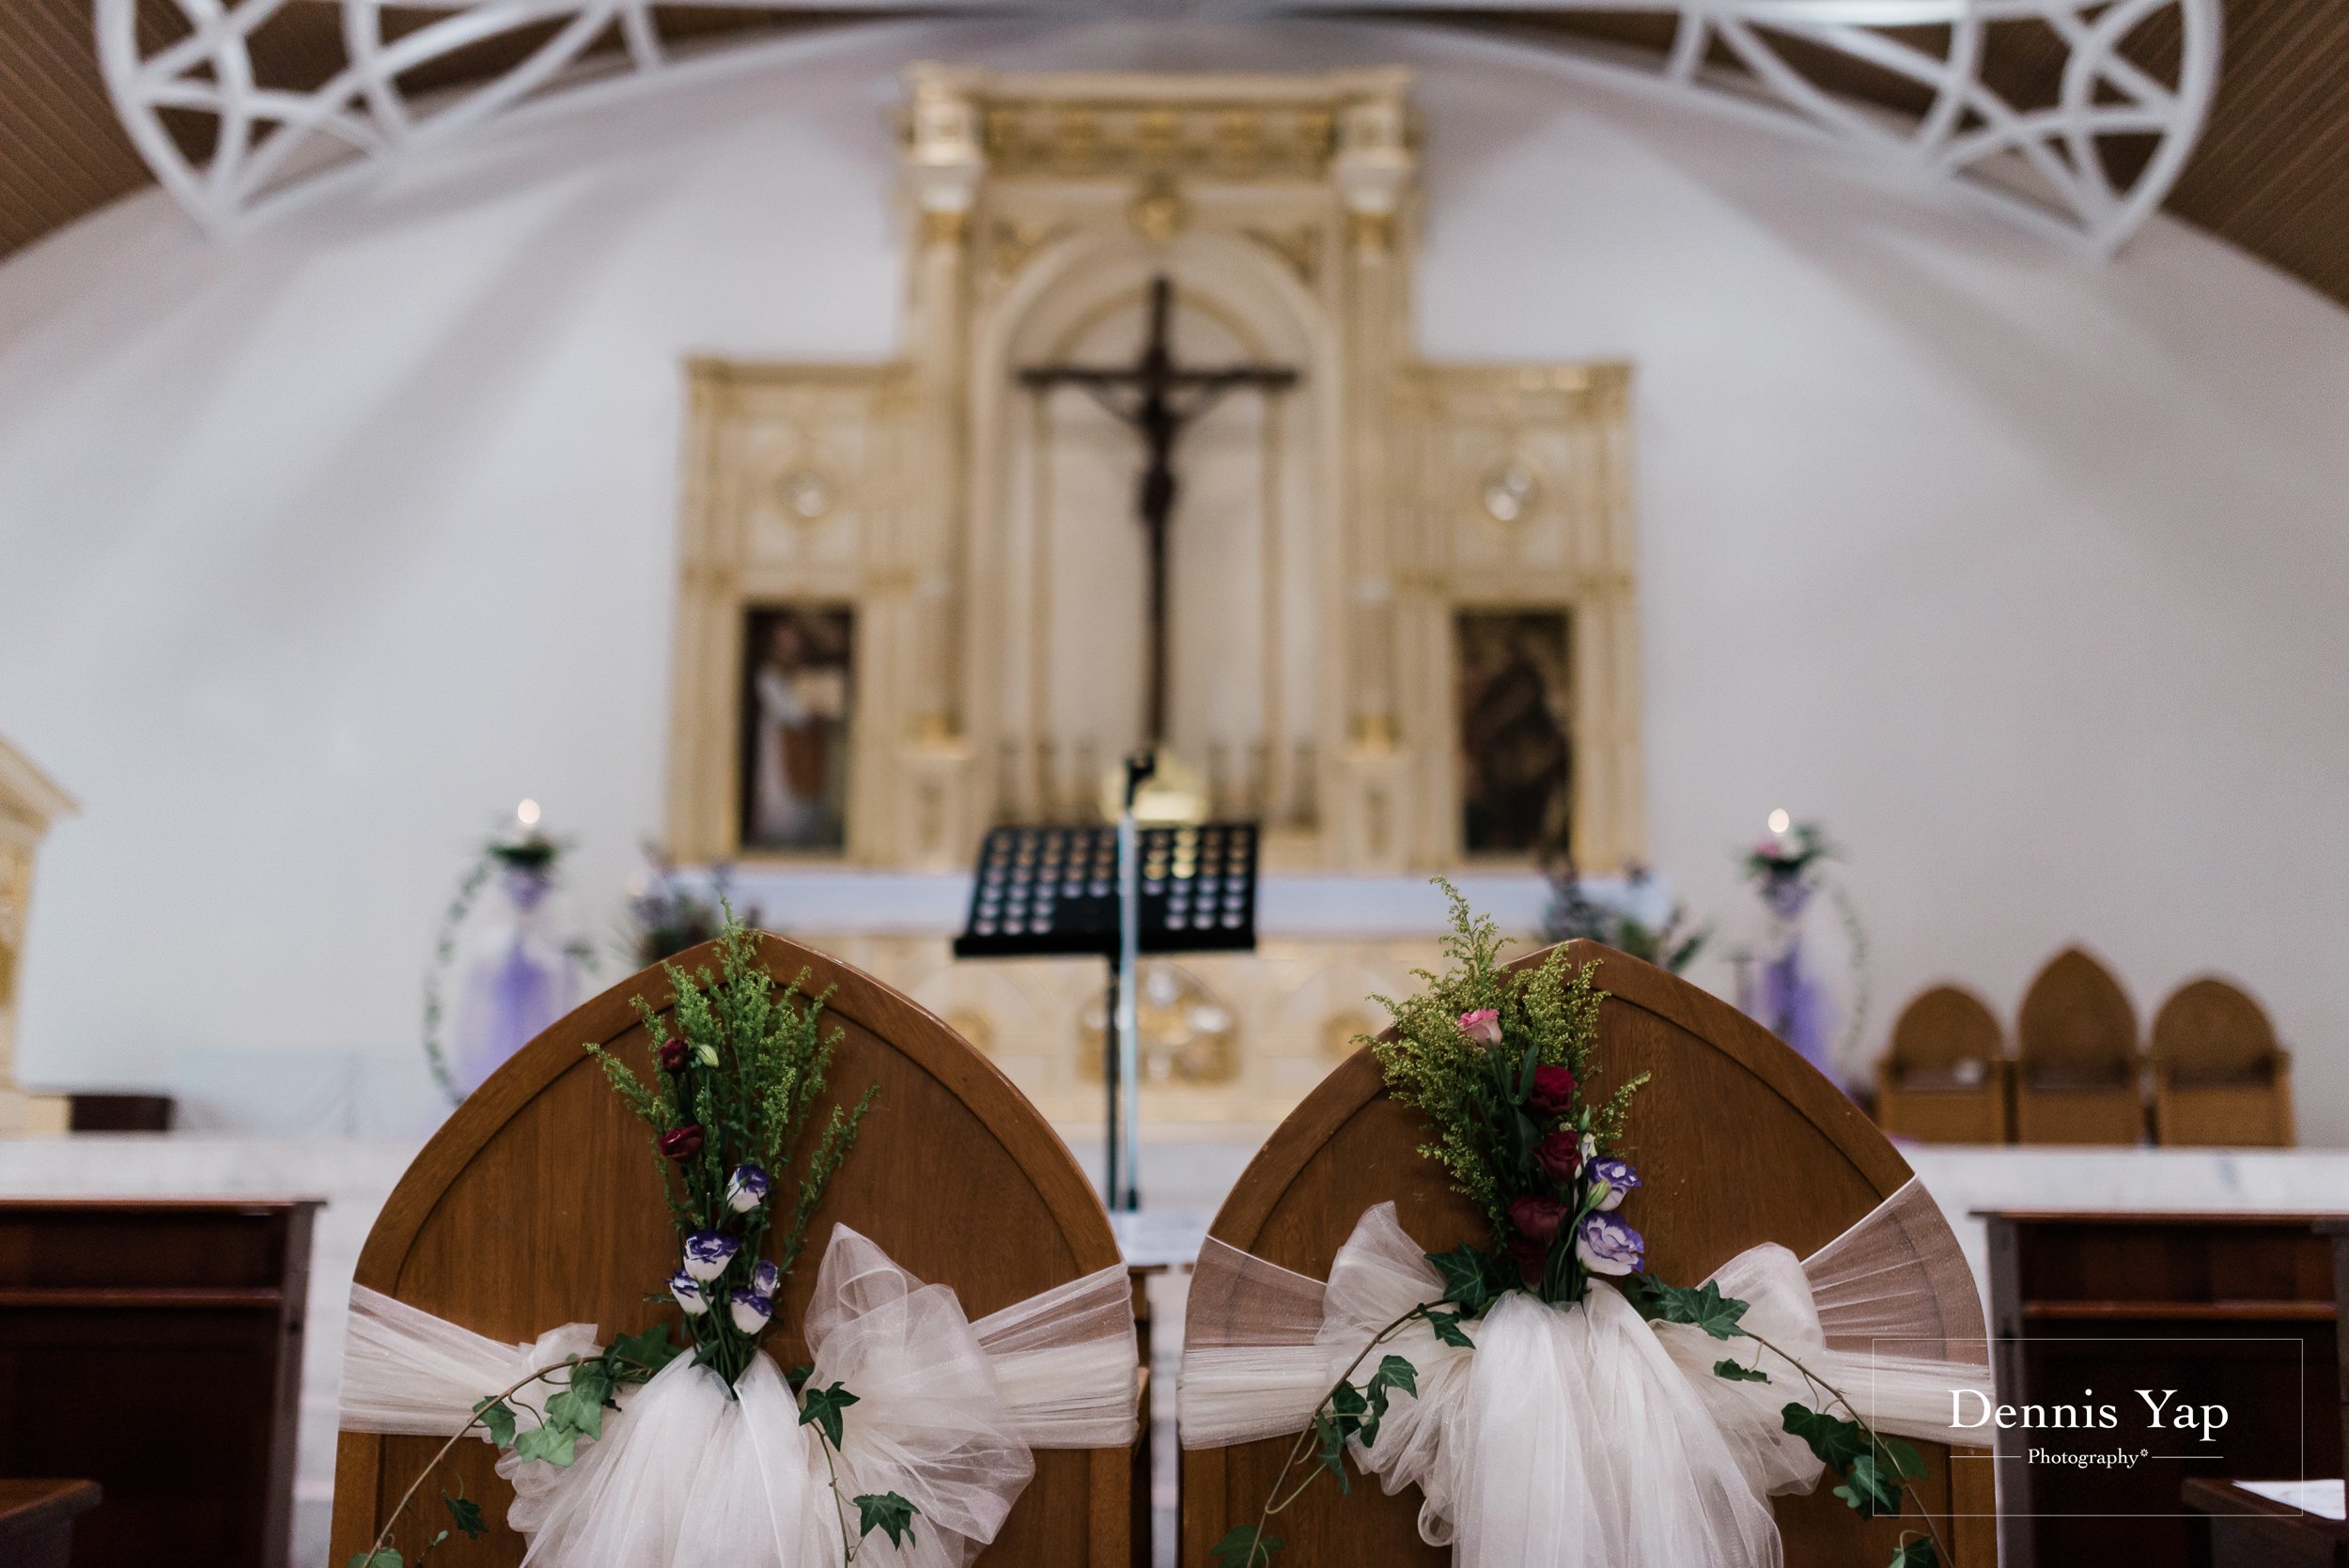 reuben daphne church wedding st francis xavier kuala lumpur dennis yap photography-18.jpg